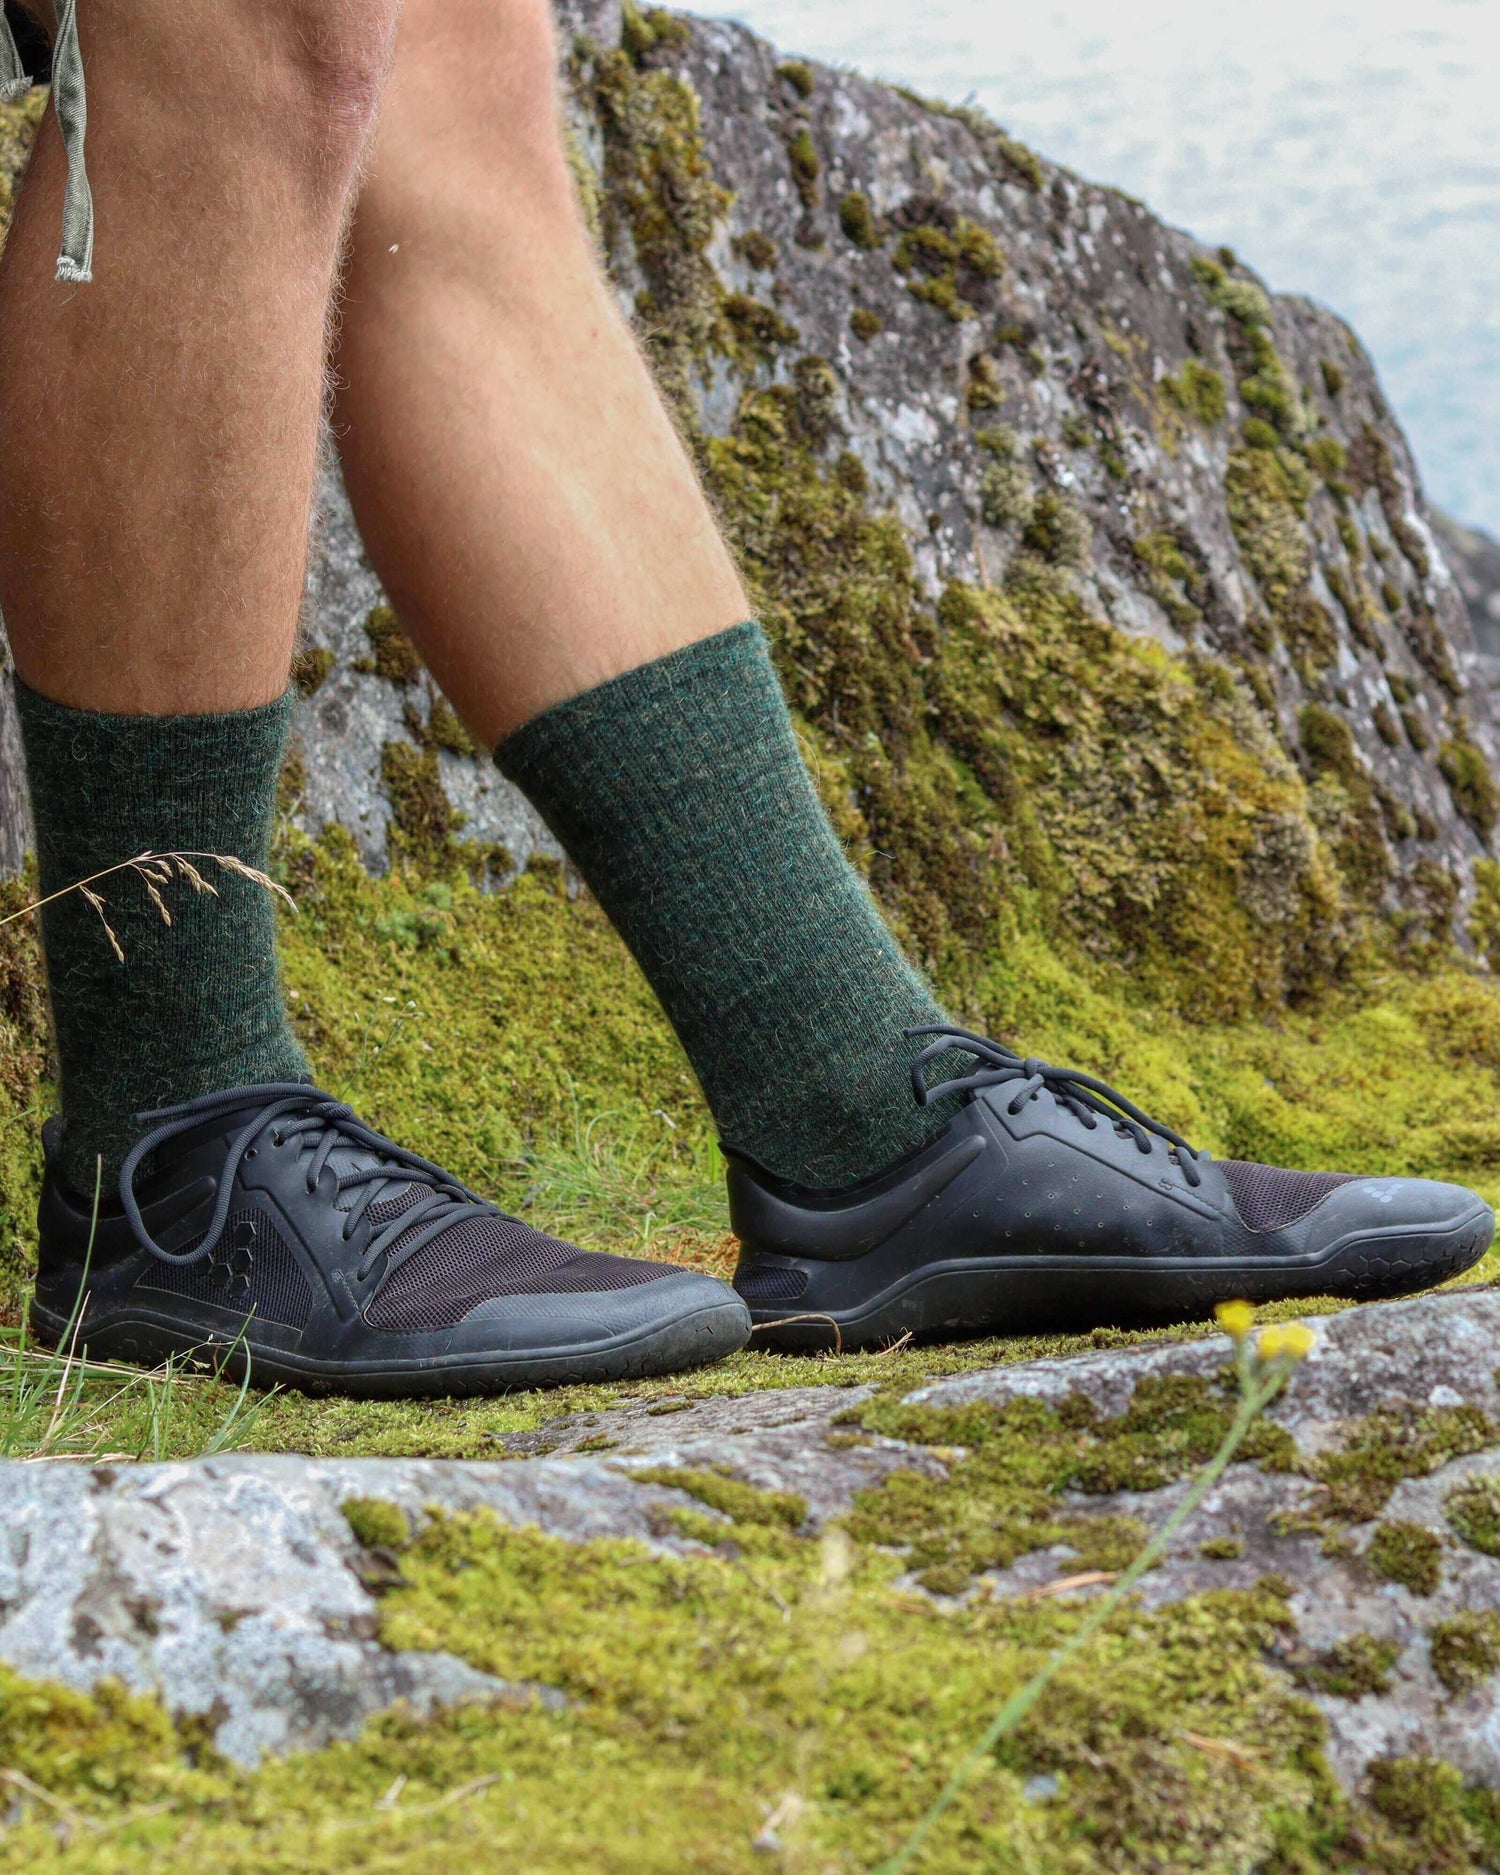 HELLE - Alpaca light hiking sock - Socks of the Year - 10 pack